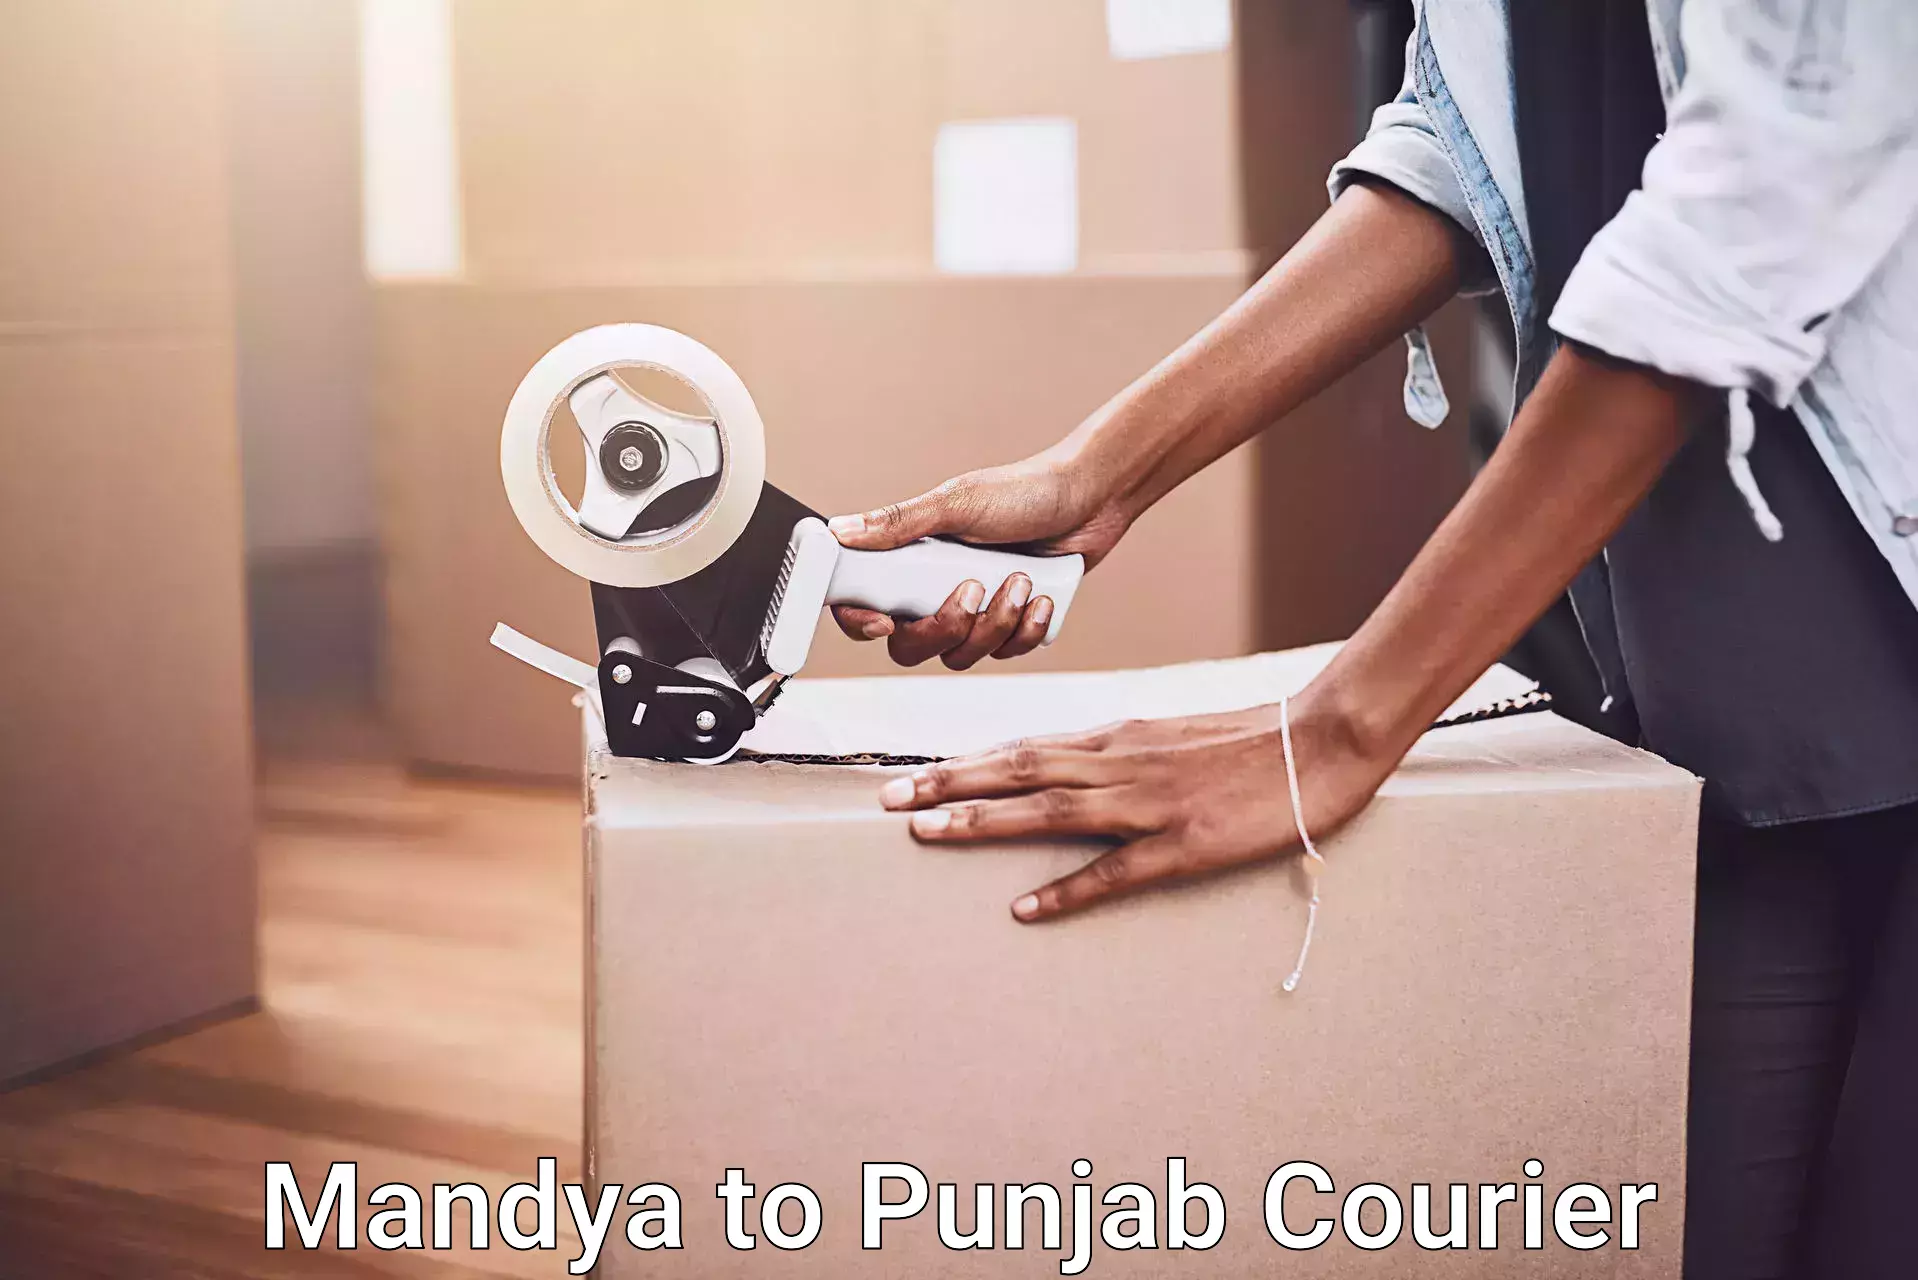 Hassle-free relocation Mandya to Punjab